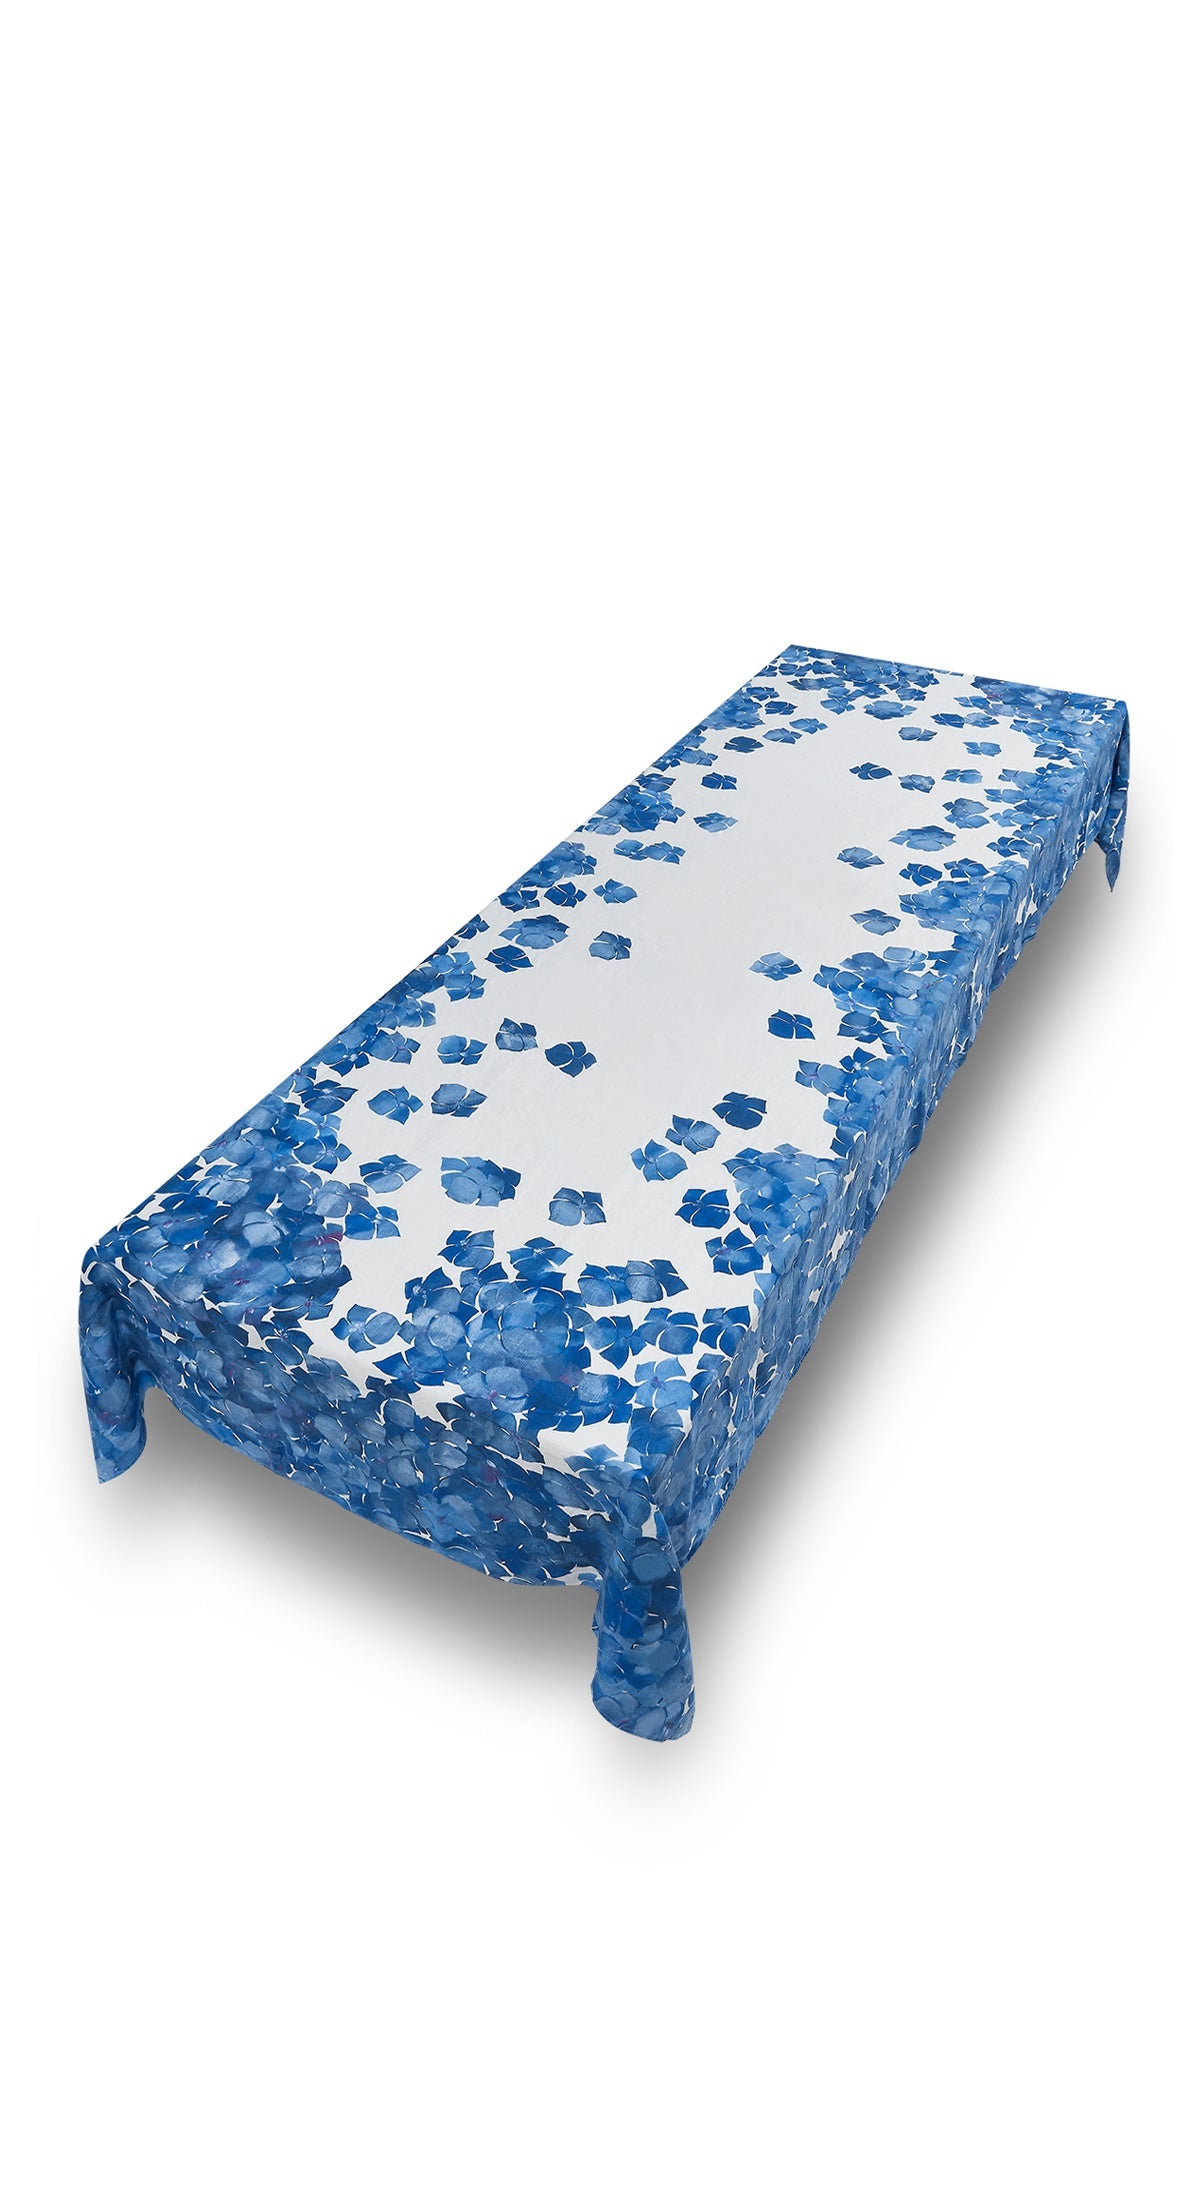 Hydrangea Linen Tablecloth in Blue